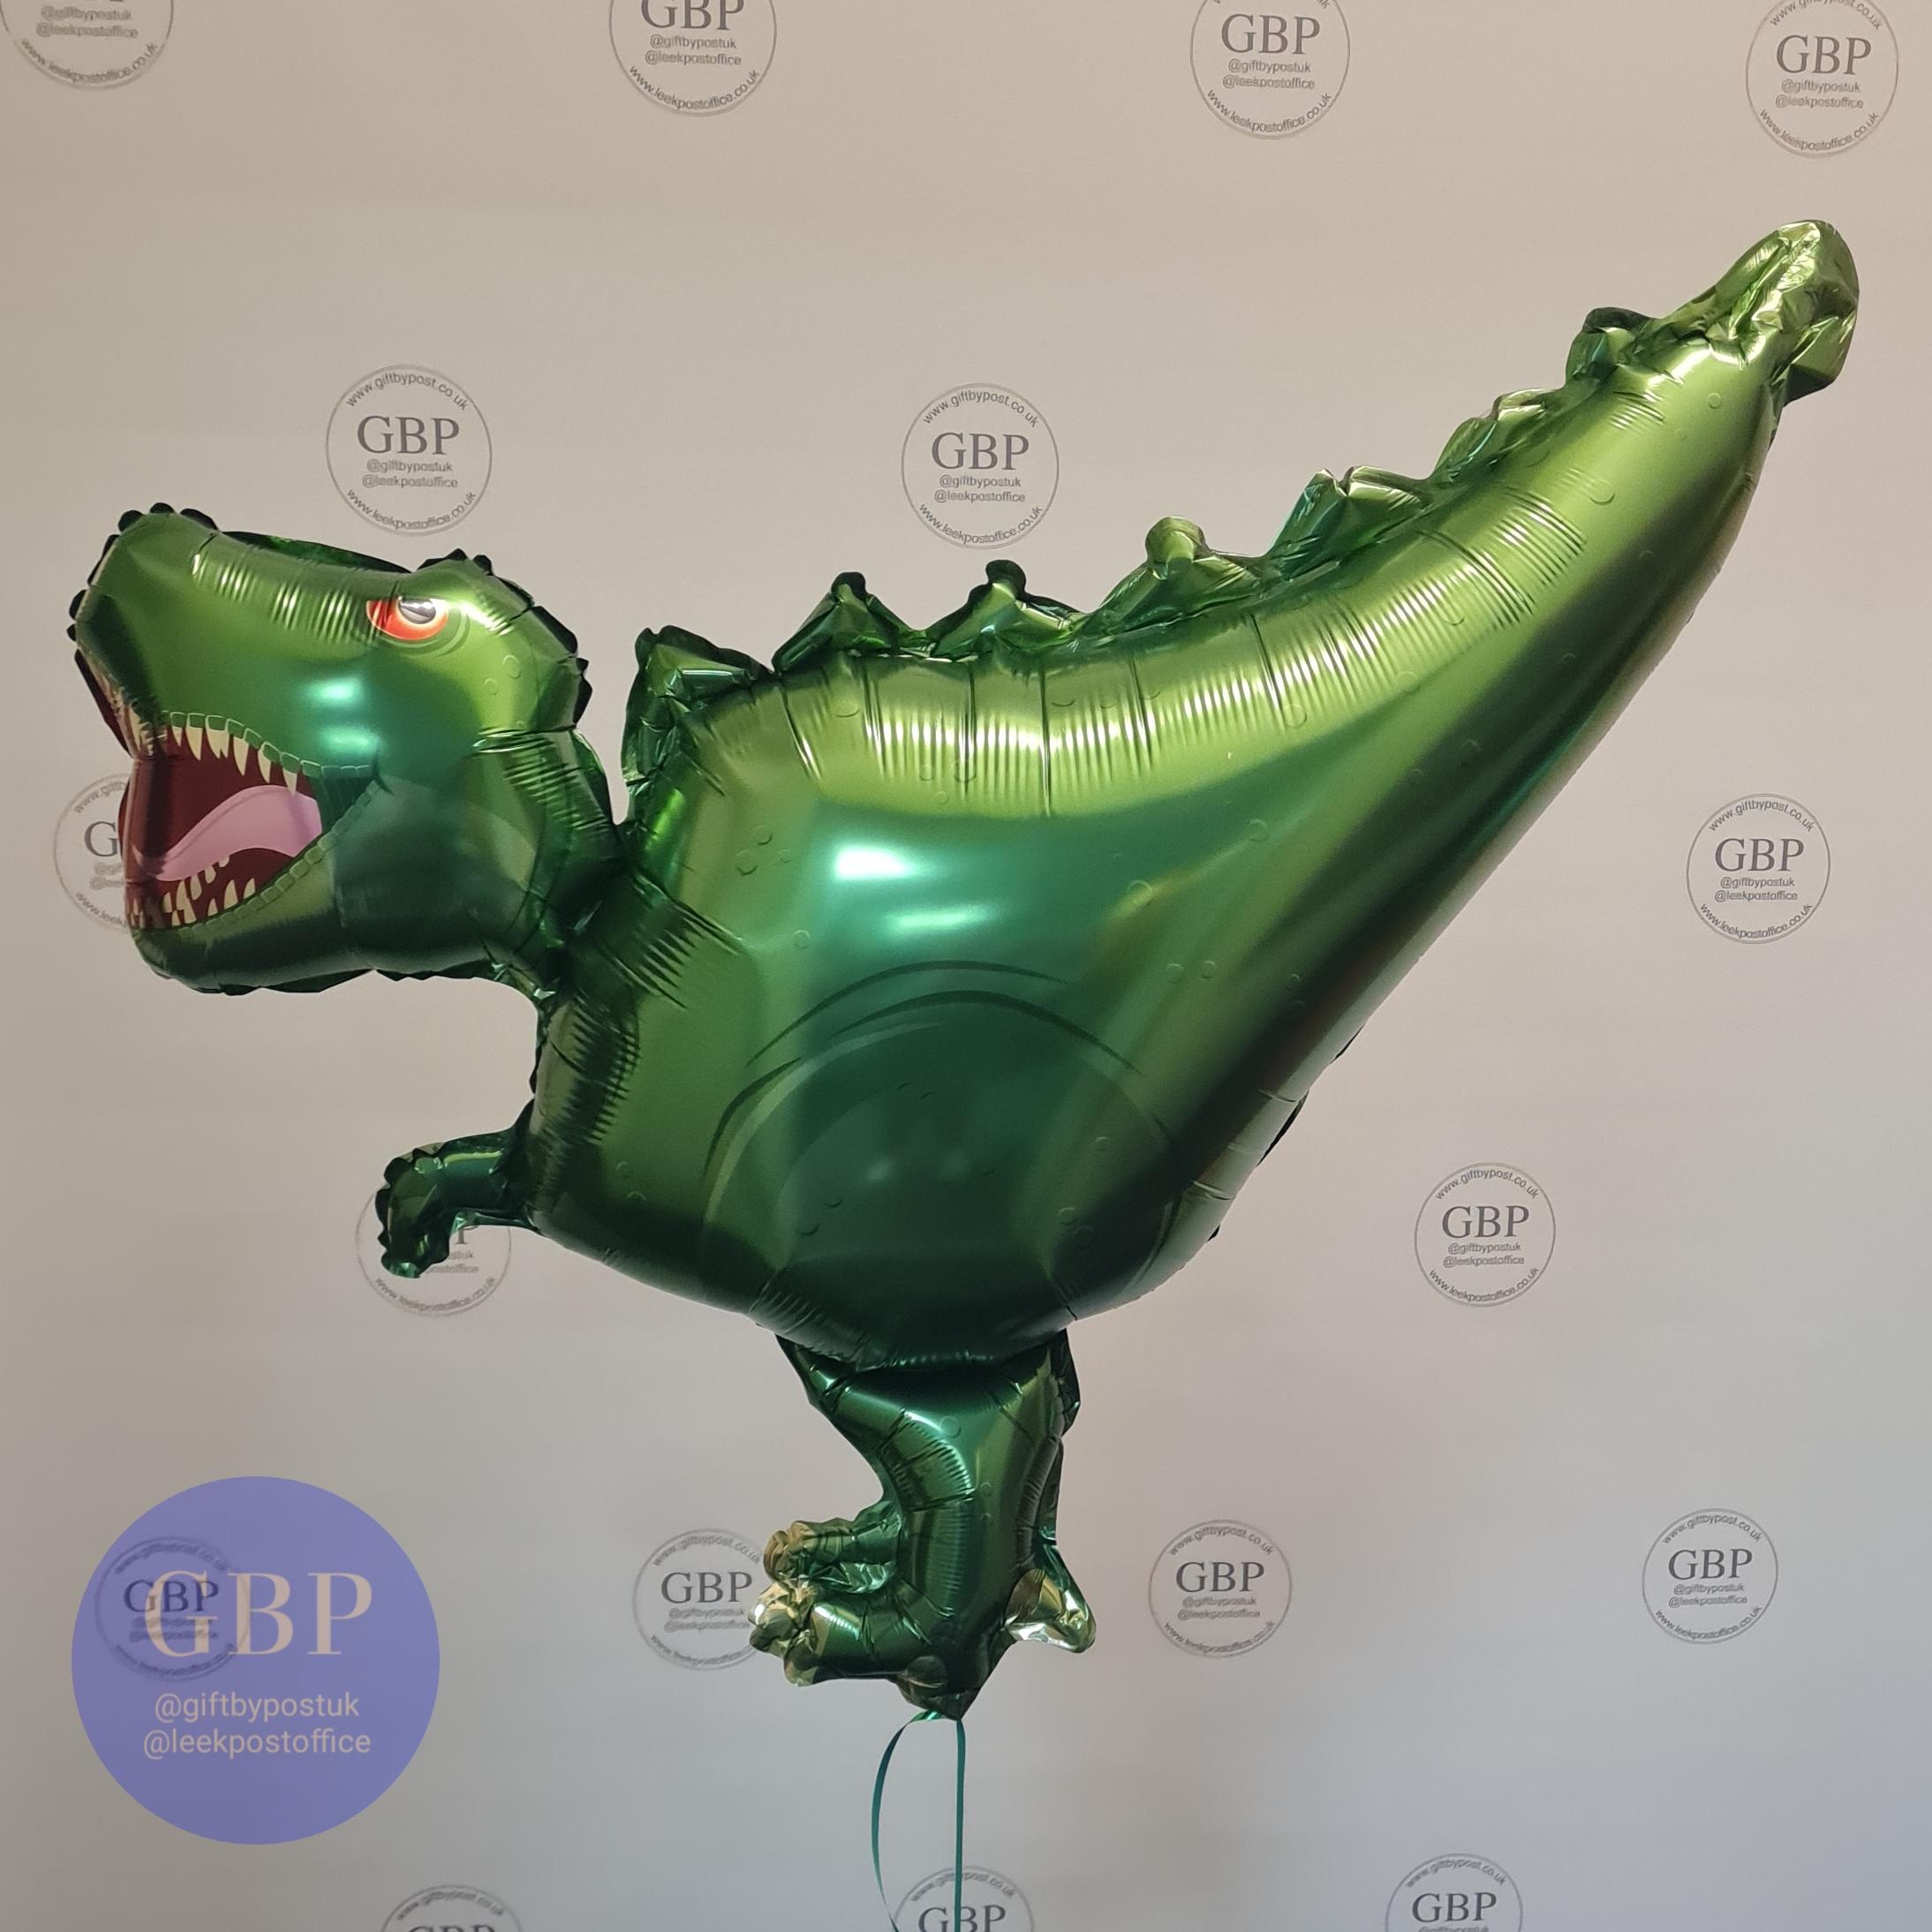 Dinosaur Helium balloon, inflated